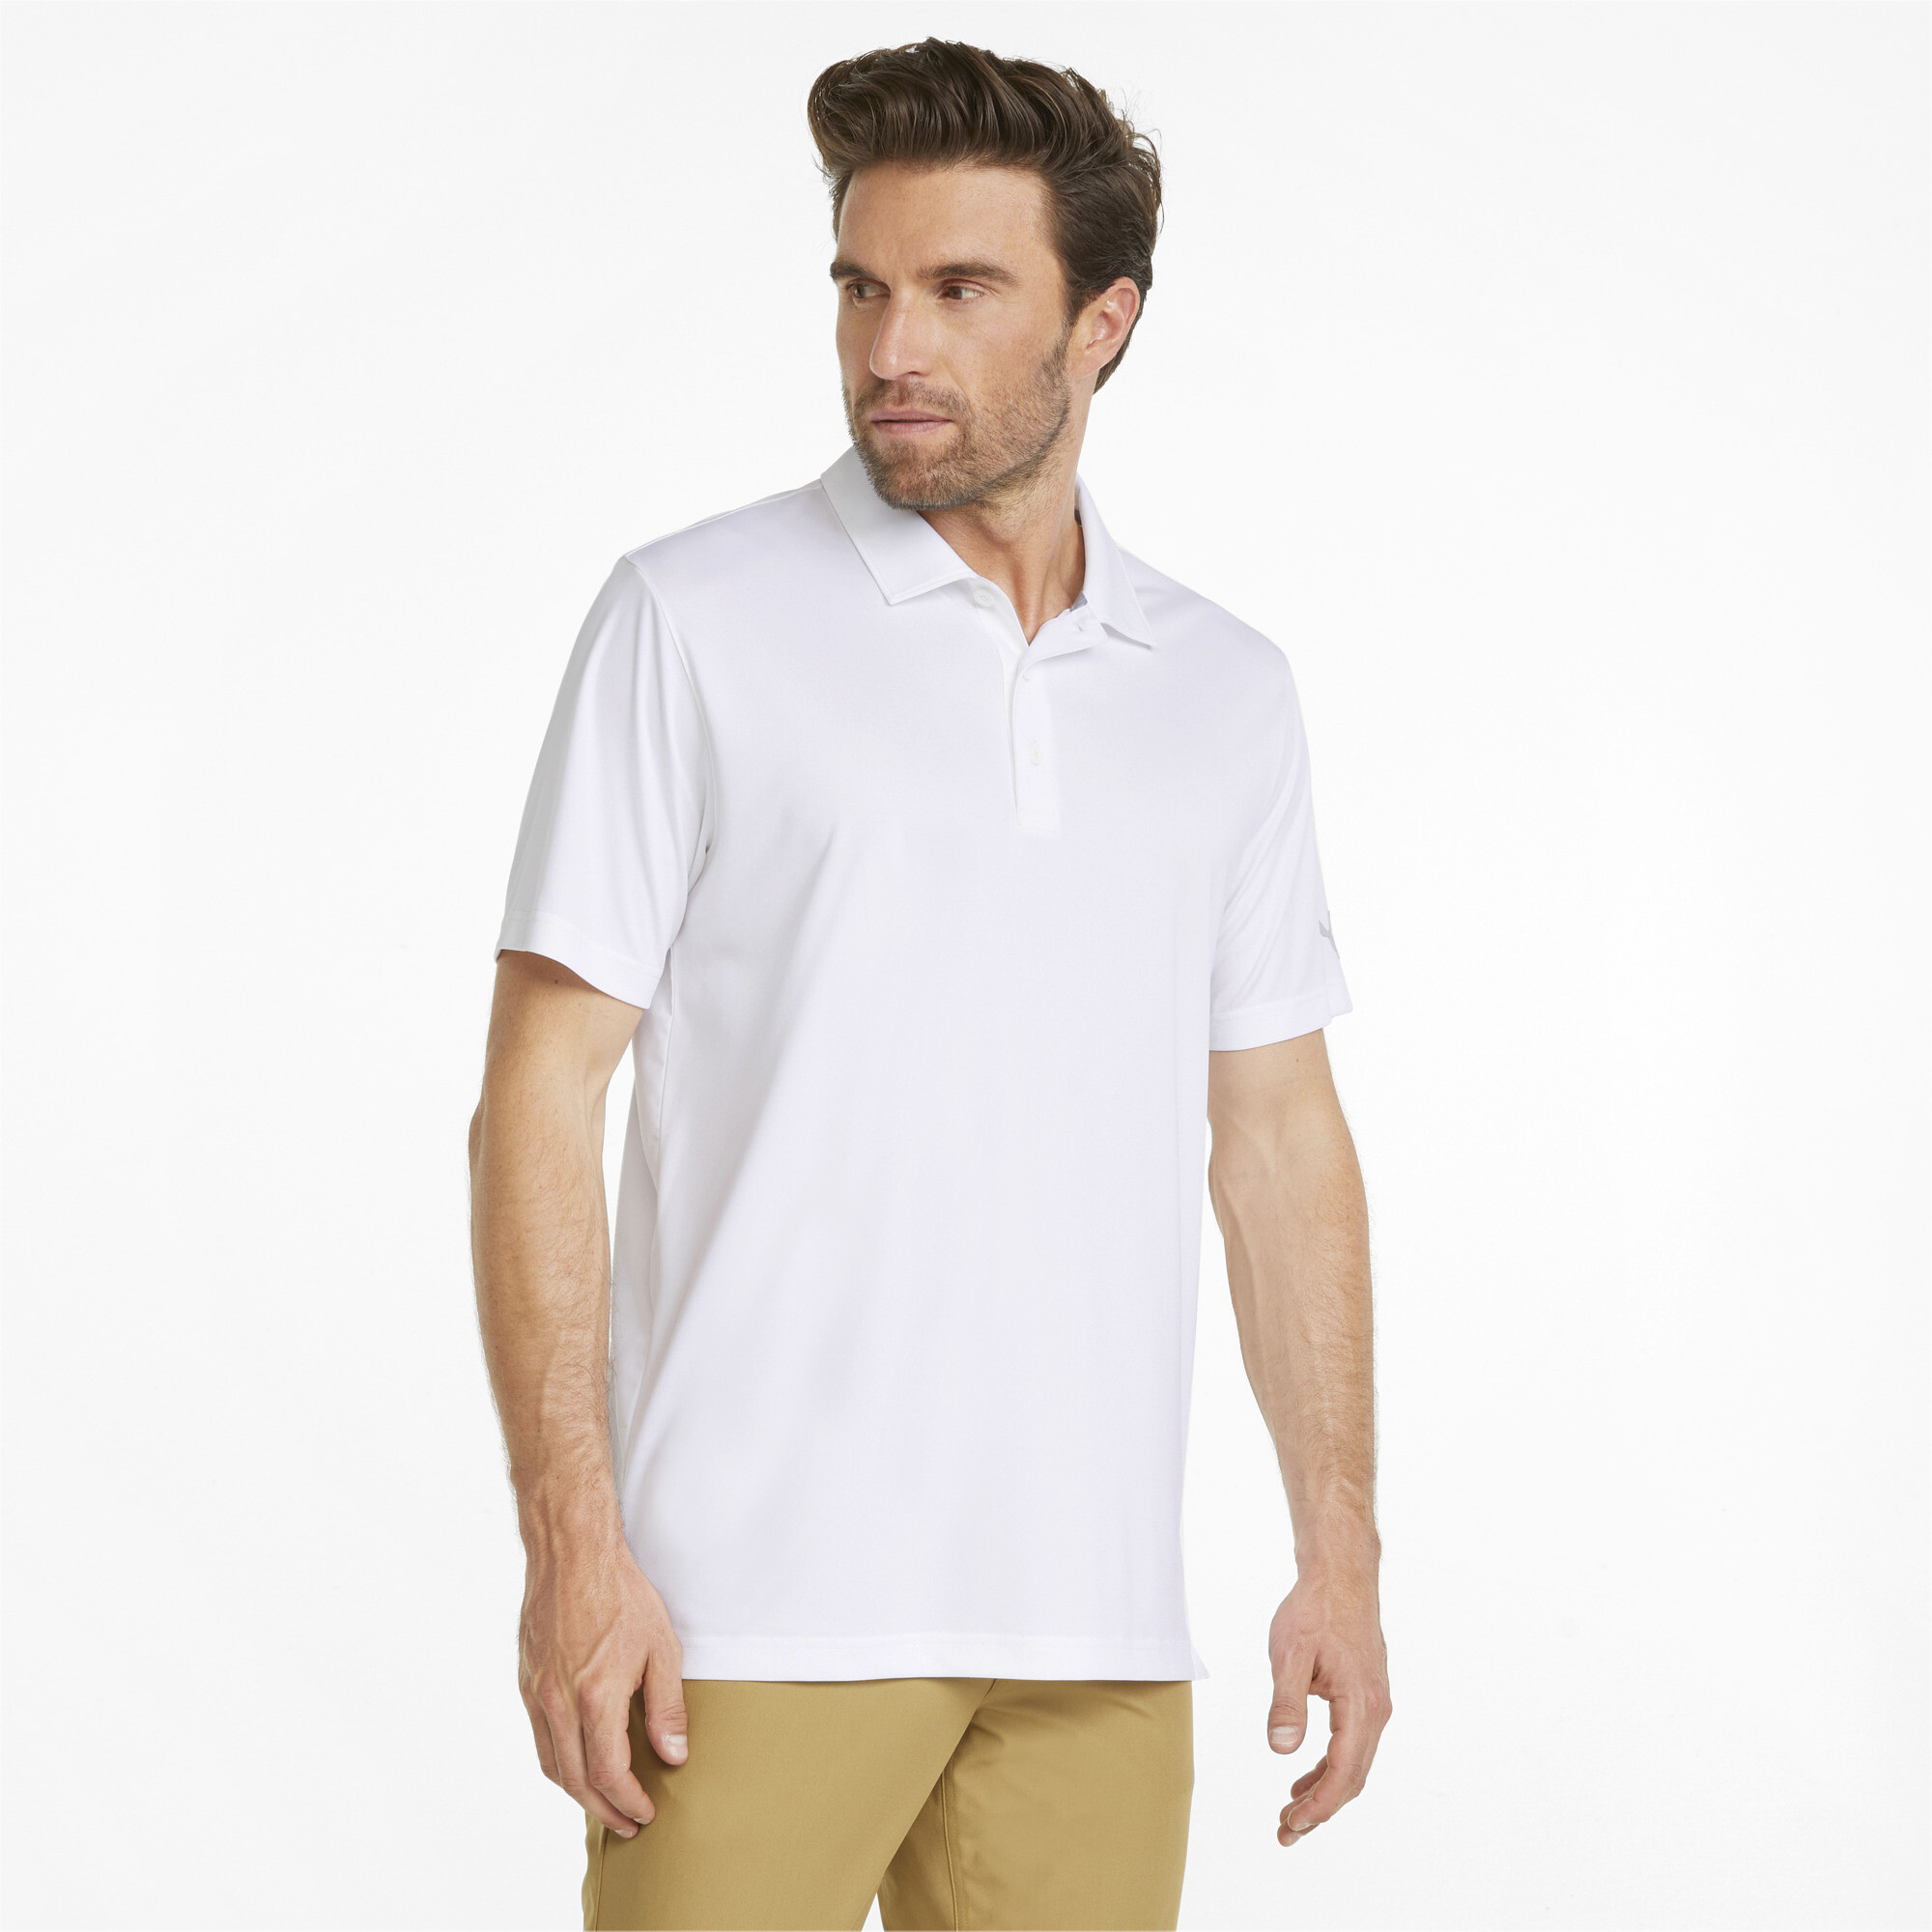 Men's Puma Gamer's Golf Polo Shirt T-Shirt, White T-Shirt, Size 6XL T-Shirt, Clothing